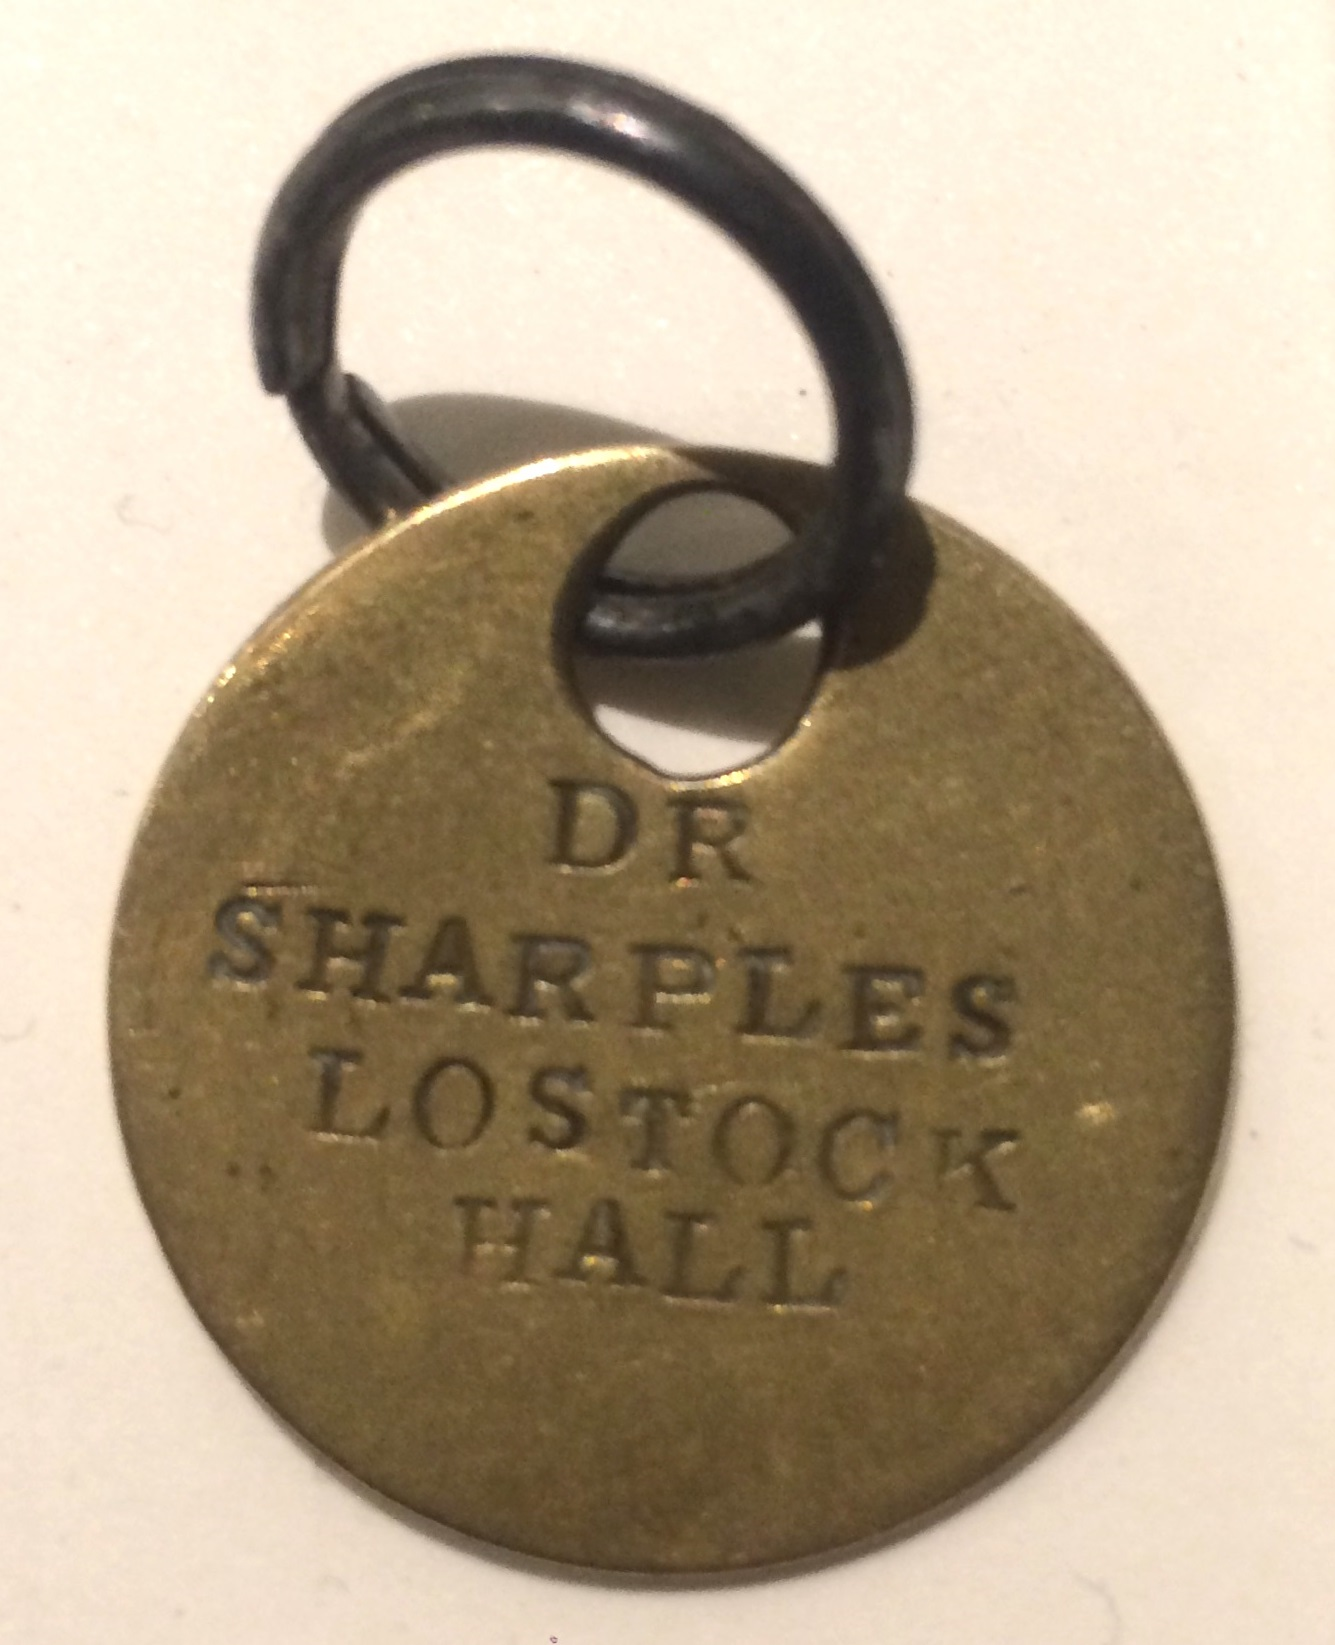 Dr Sharples' dog tag